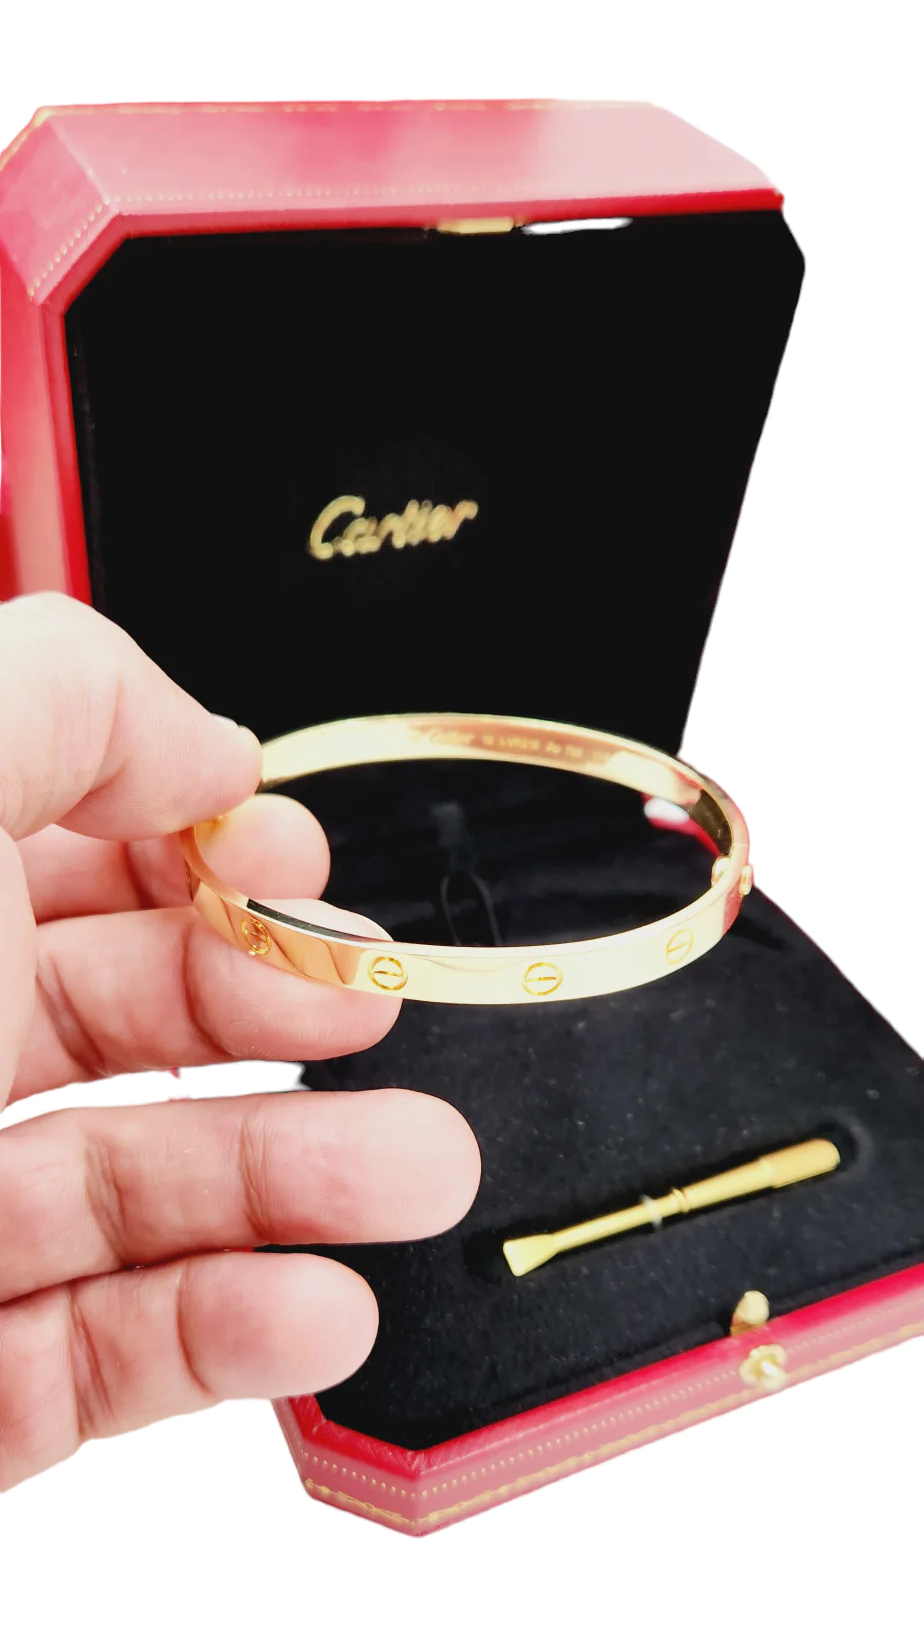 Pre-Owned Cartier Love Bracelet 18K Yellow Gold Ref. B6067517